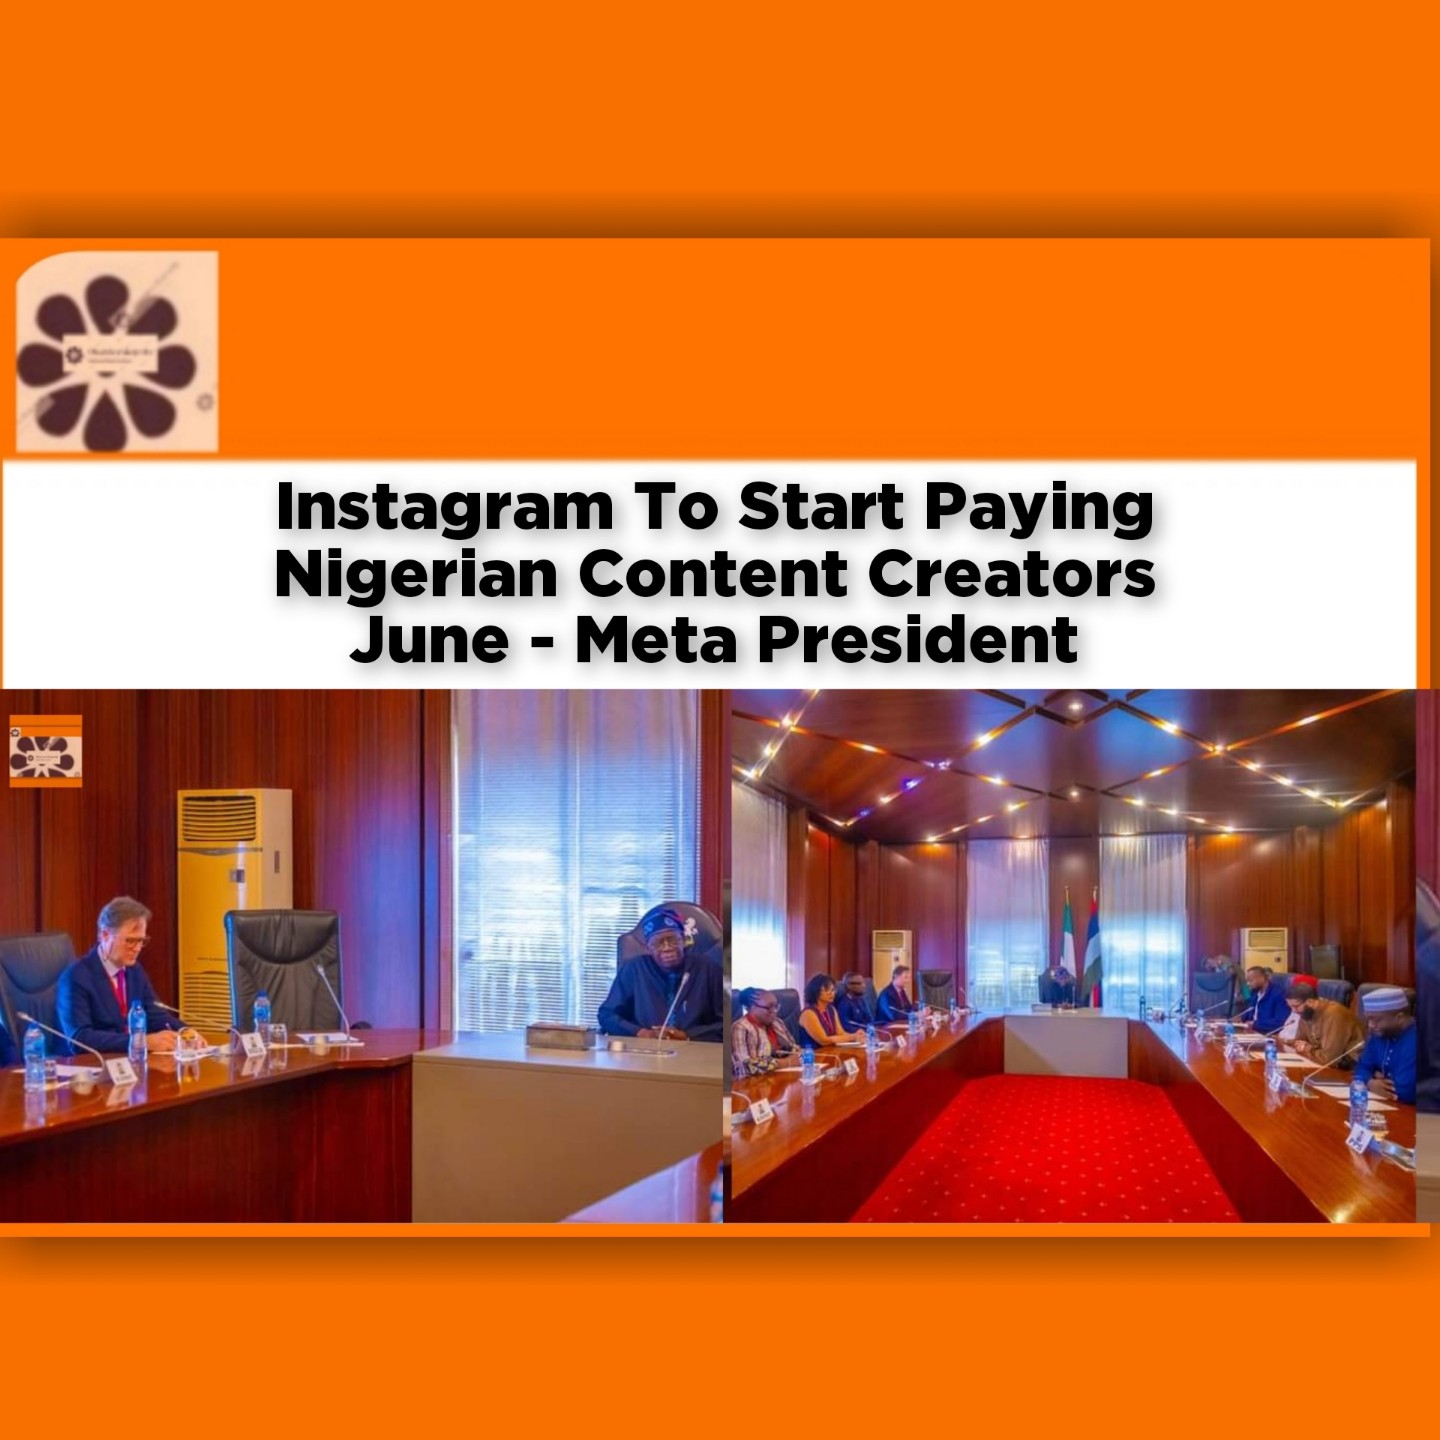 Instagram To Start Paying Nigerian Content Creators June - Meta President ~ OsazuwaAkonedo #Bola #Contents #Creators #Instagram #Meta #Nigerians #Tinubu